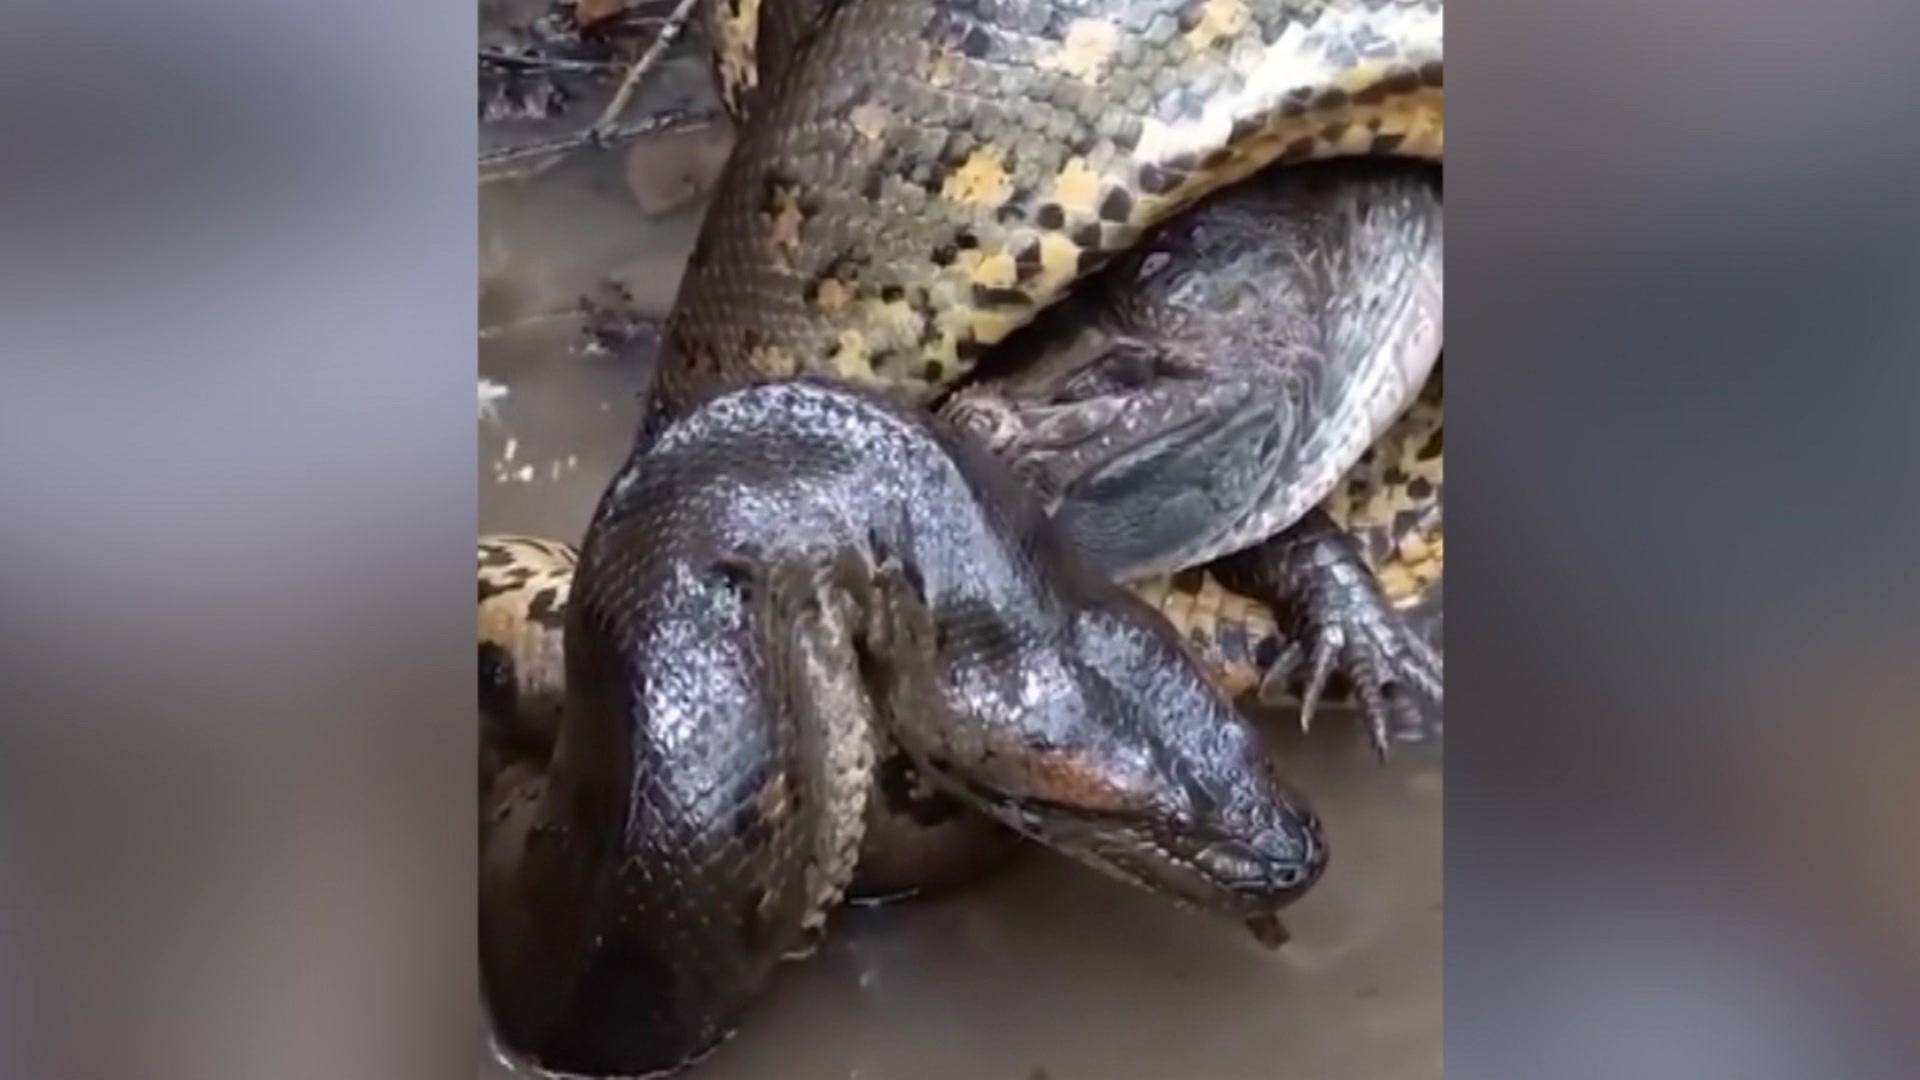 Deadly hug!  Snake crushes alligator shock footage from Brazil